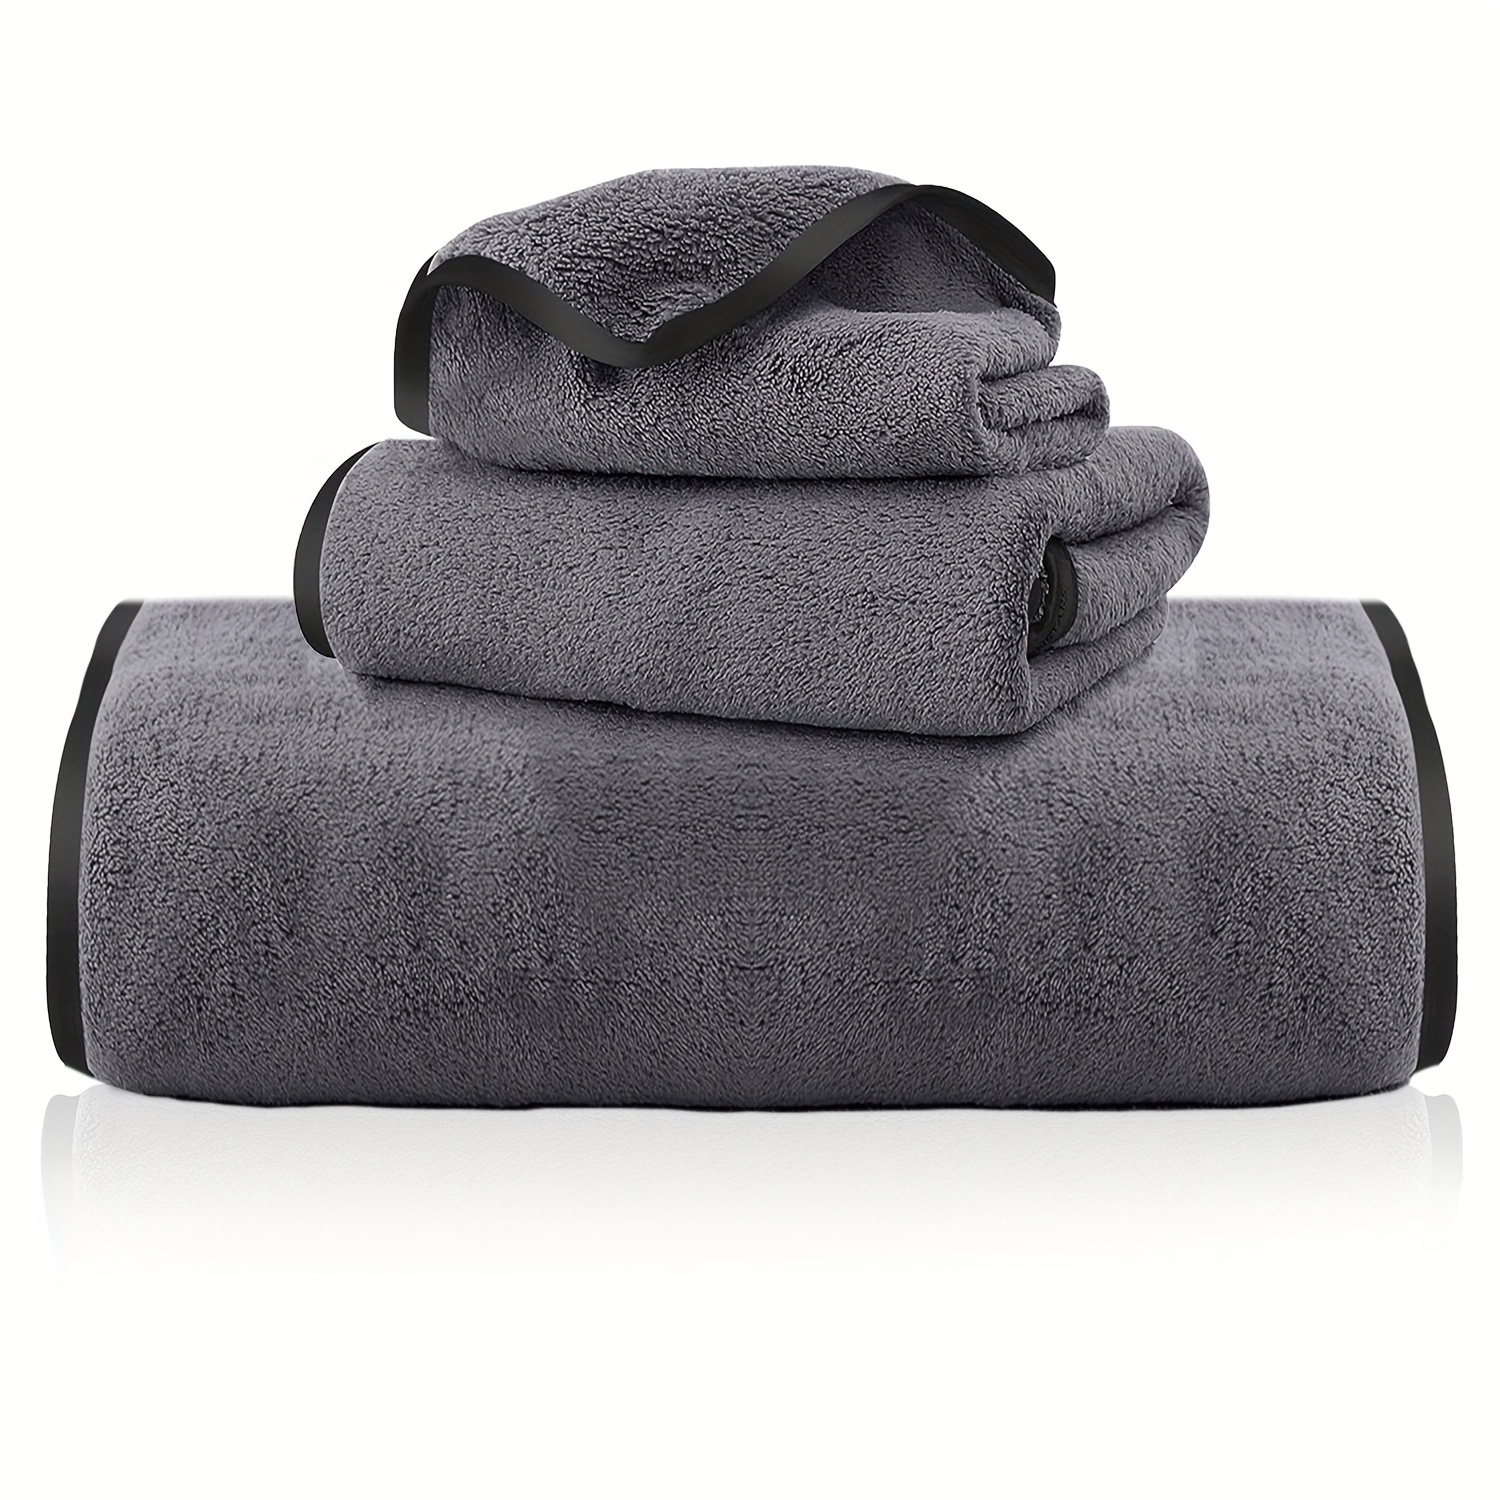 3pcs Washcloths Towels for Bathroom Running Towels for Sweat Absorbent  Towel Towels Absorbent Gym Towels for Working Out Long Towel Bath Towel  Cotton